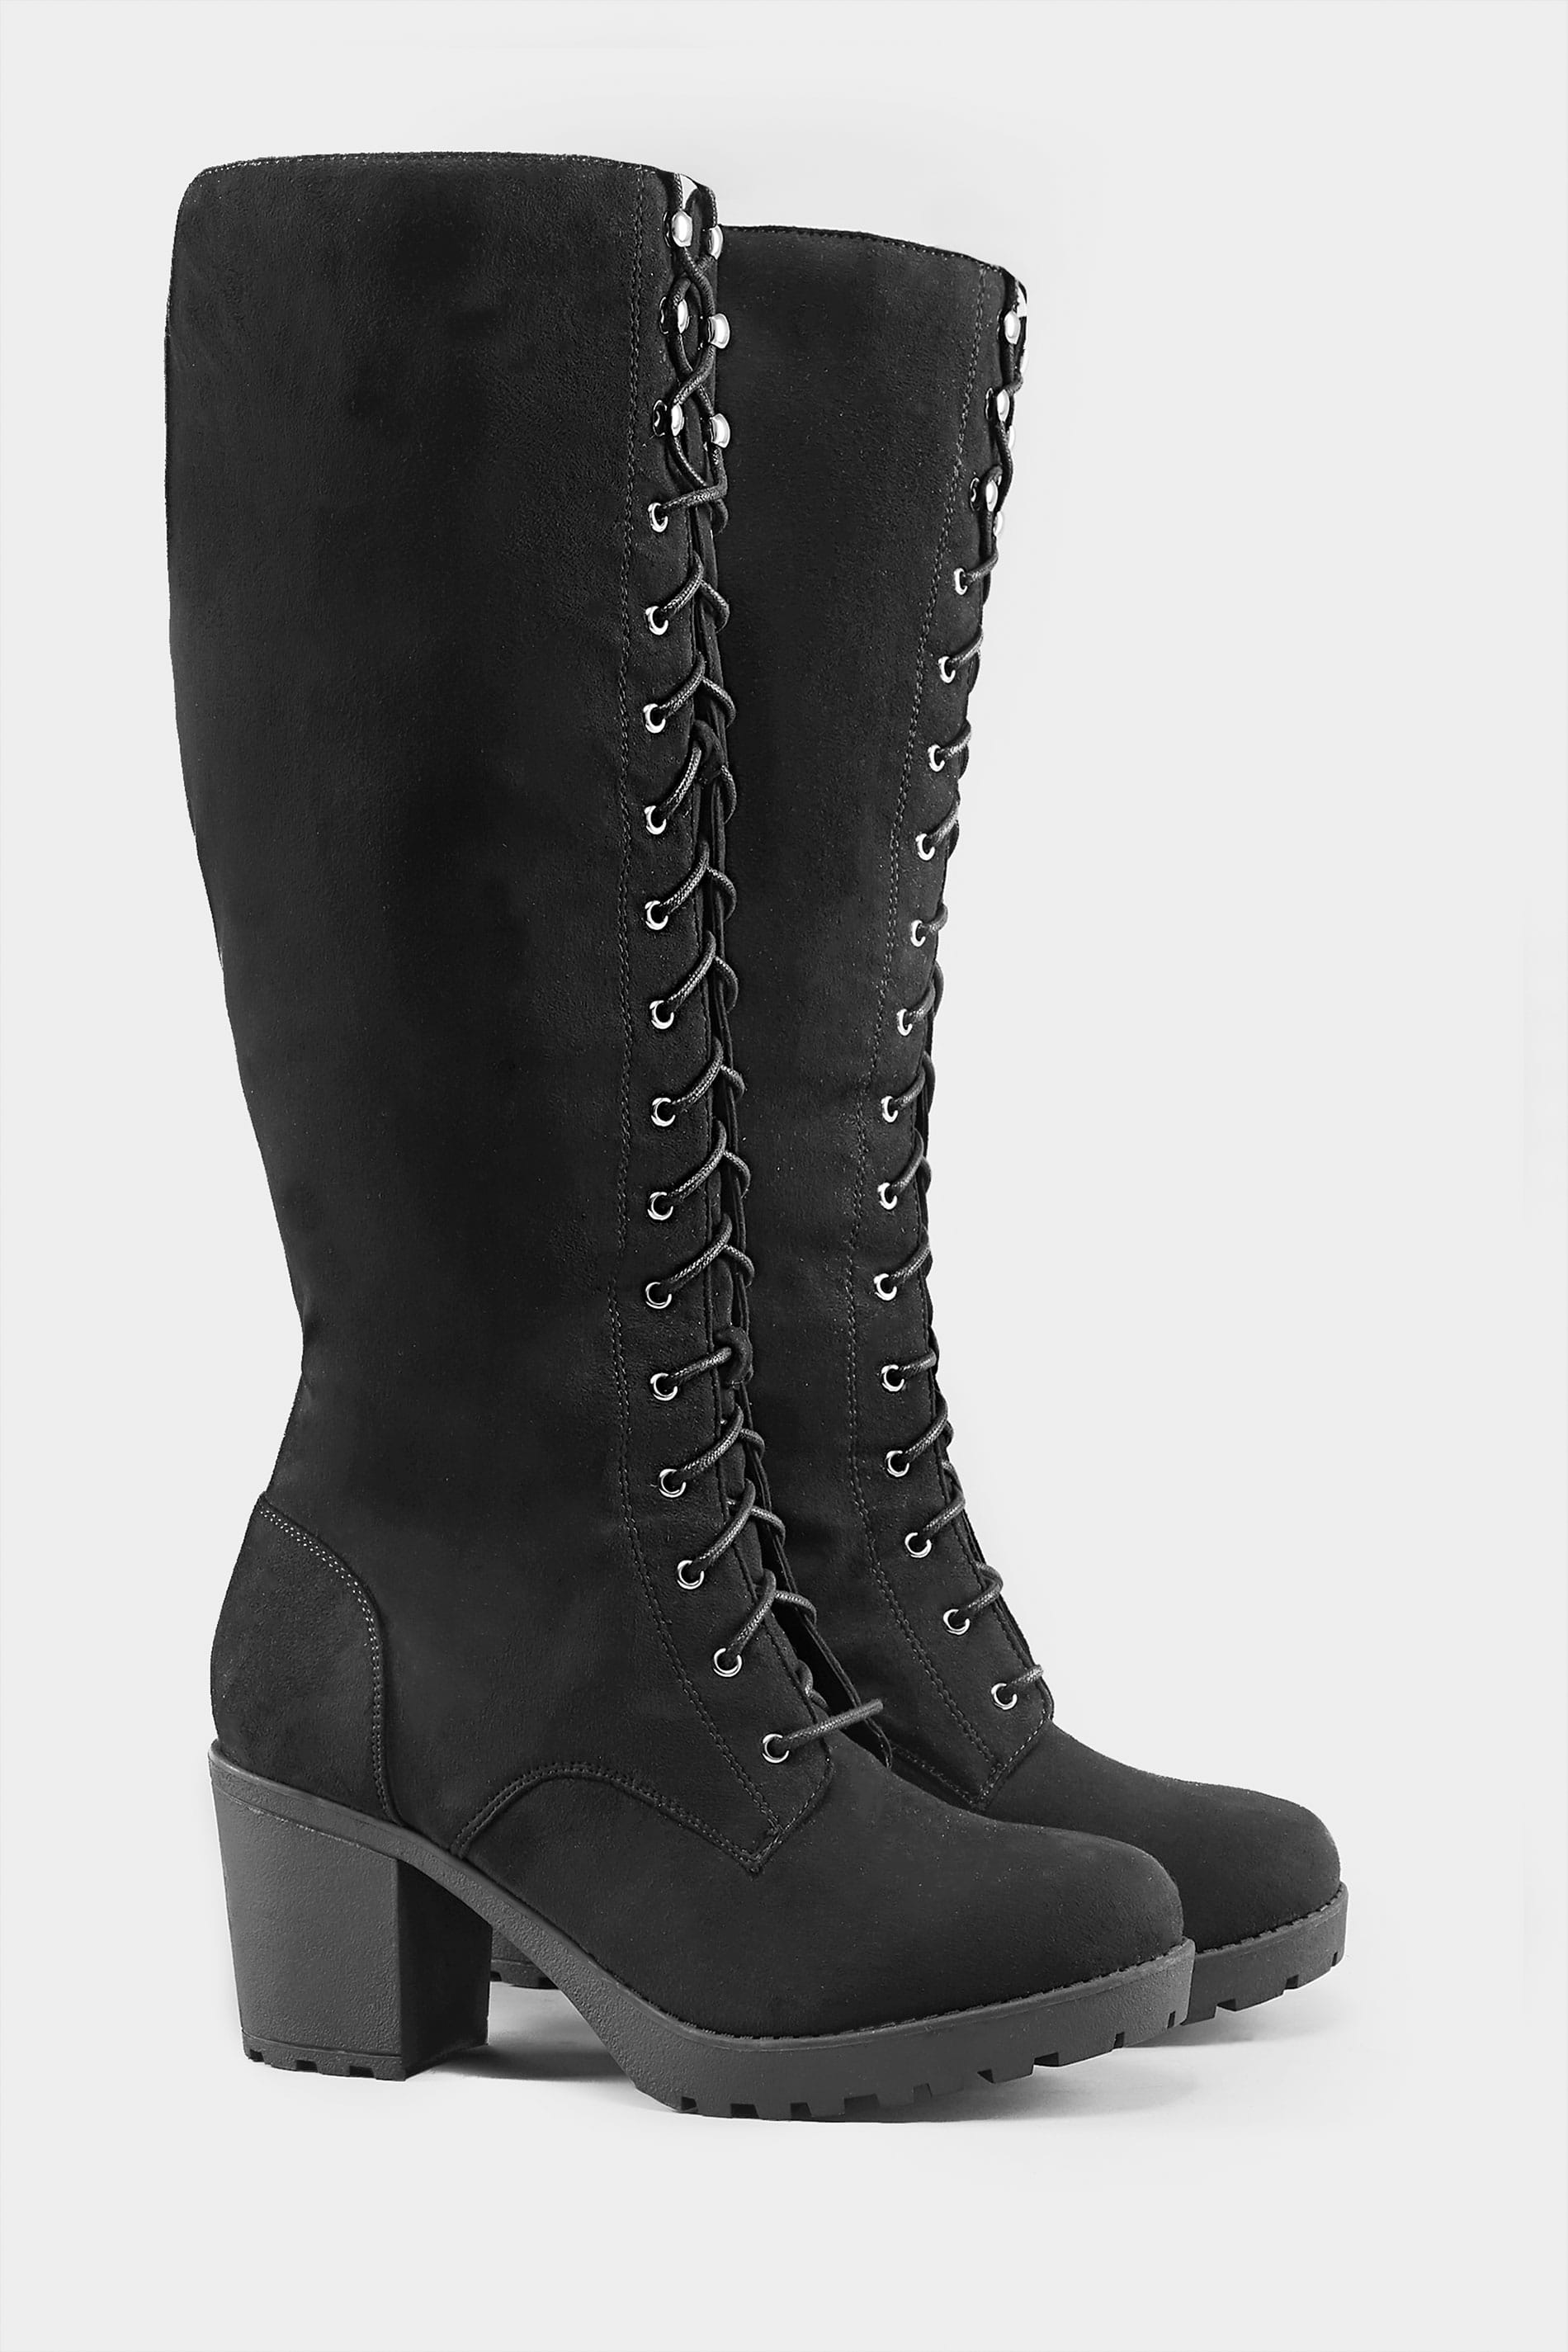 black lace up long boots